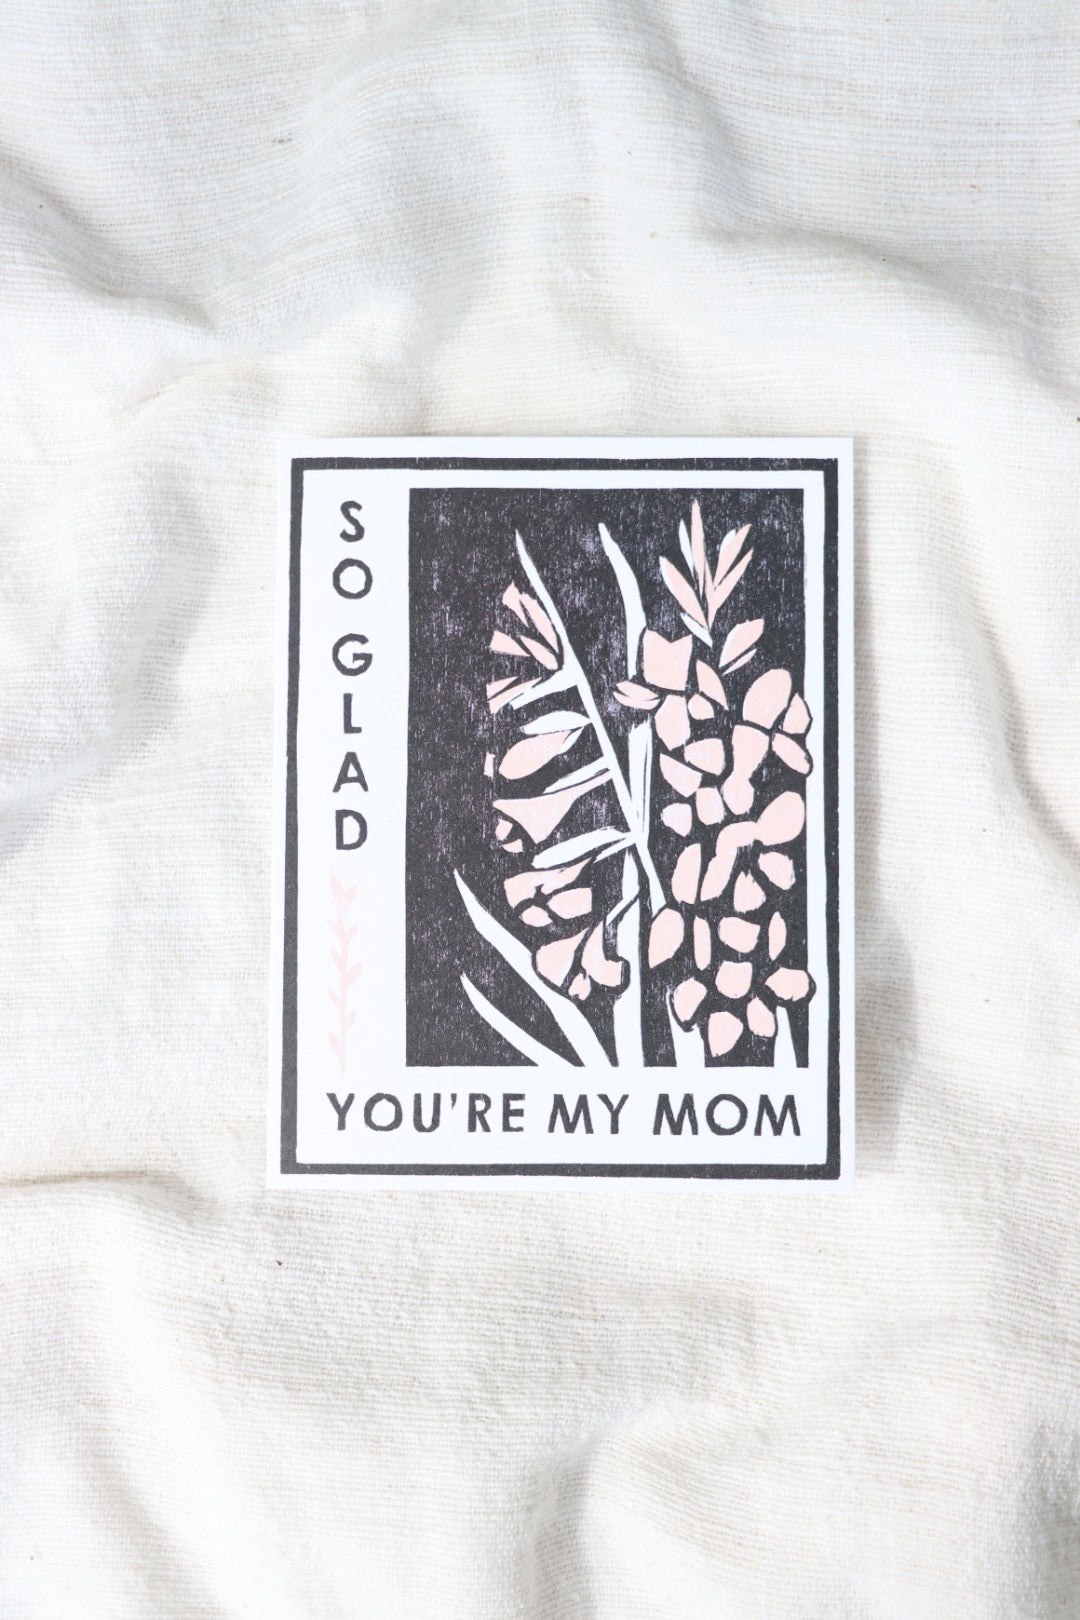 Gladiolas for Mom Card